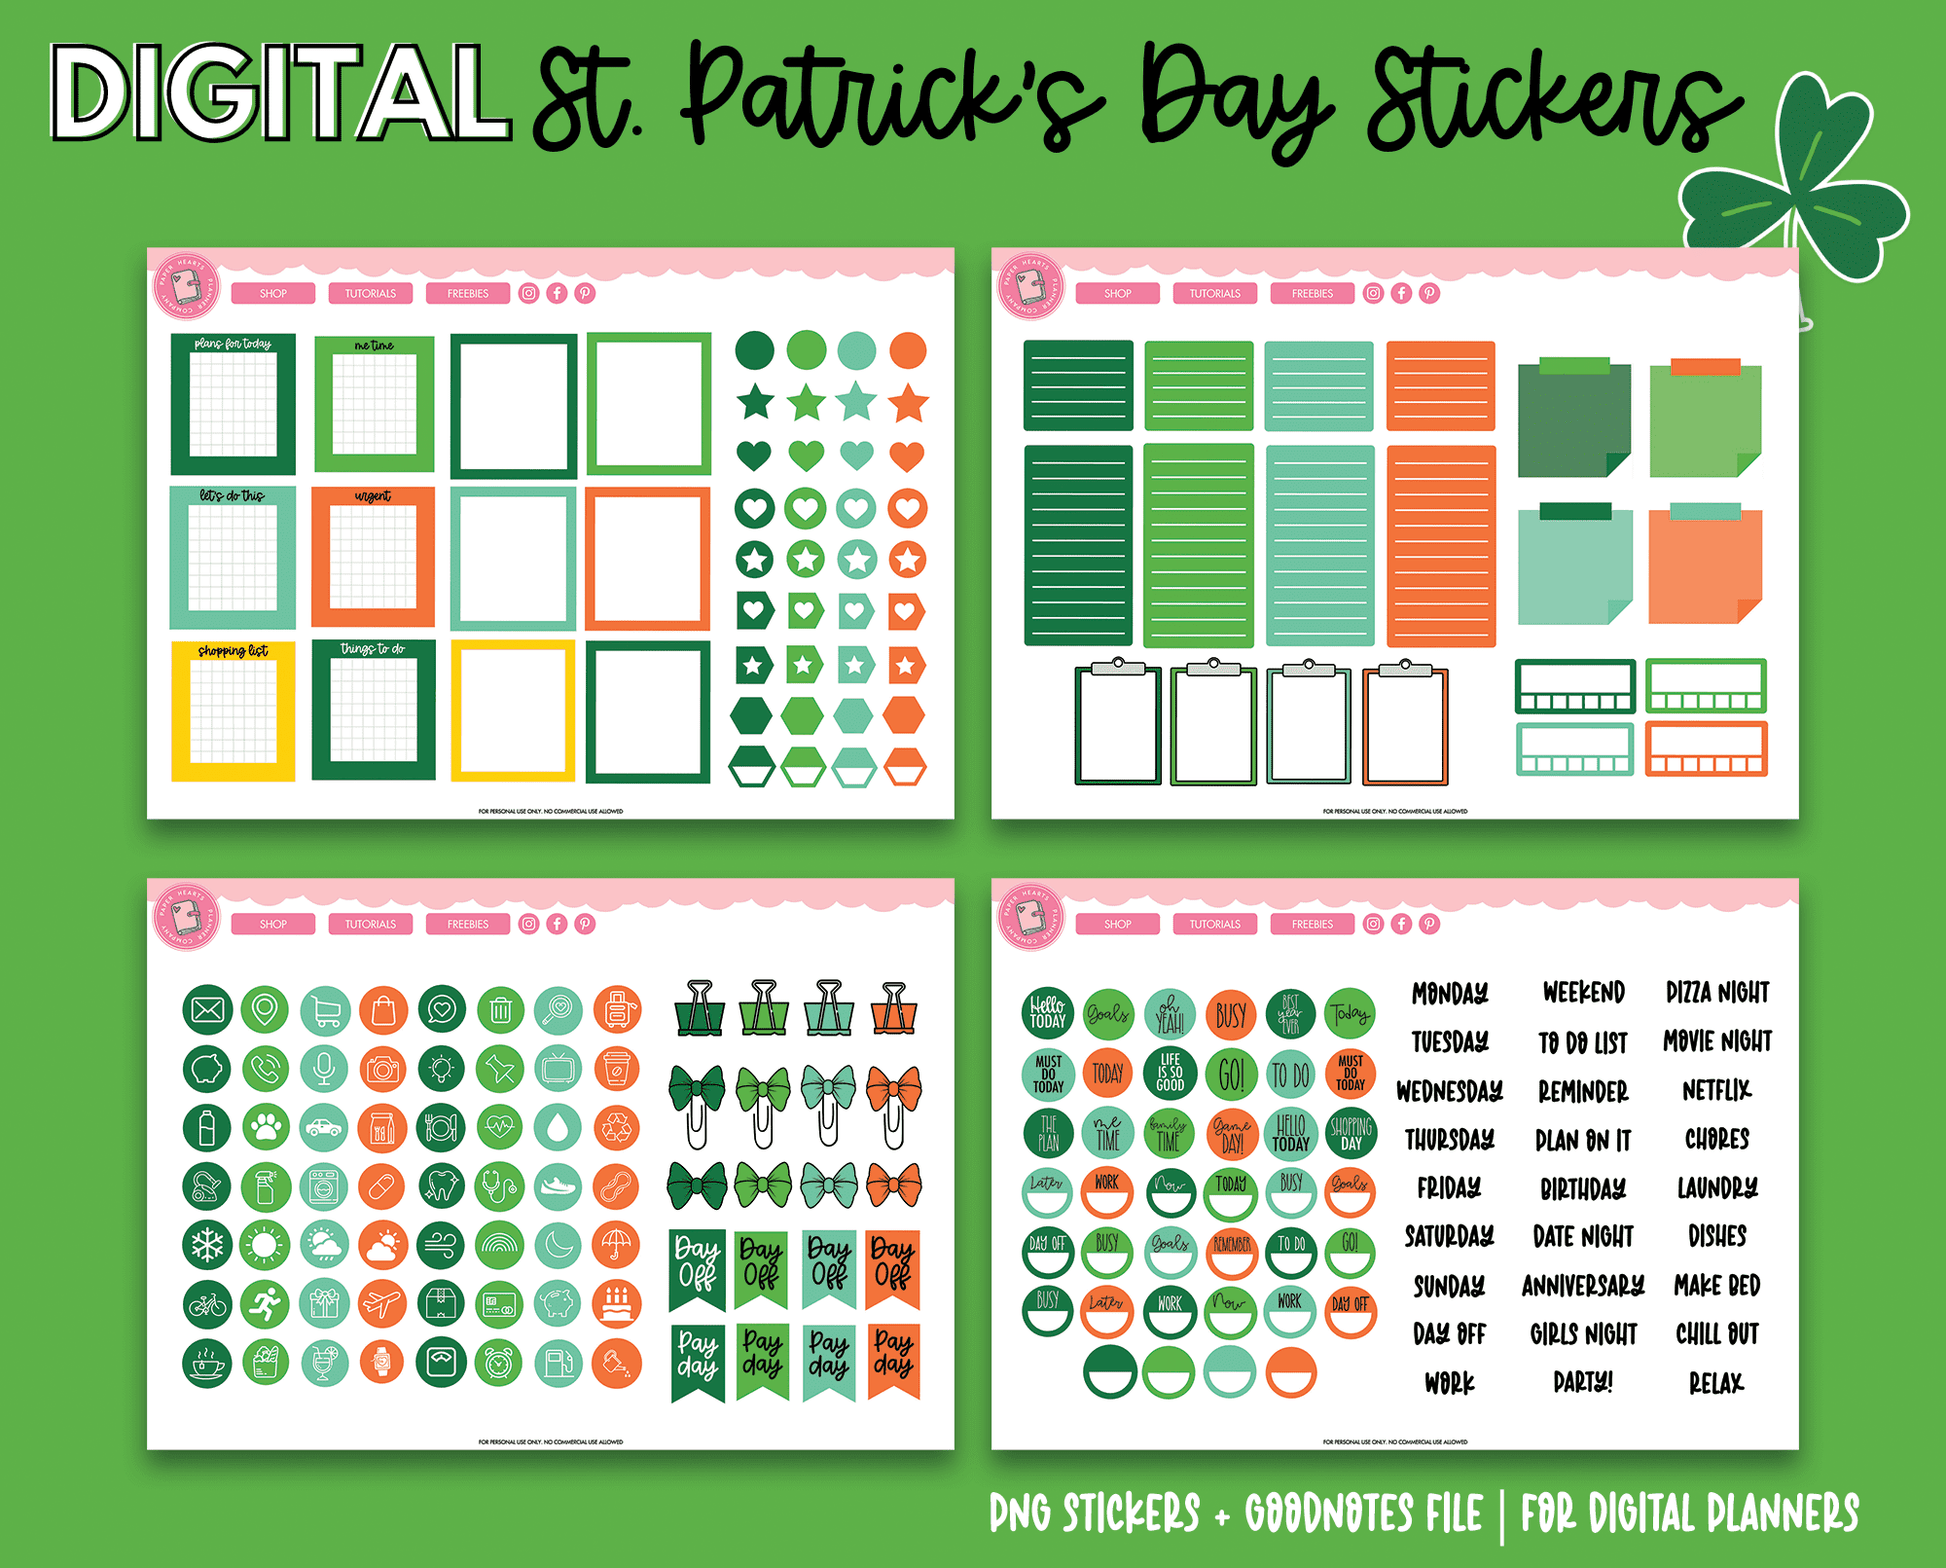 Digital Everyday Planner Stickers